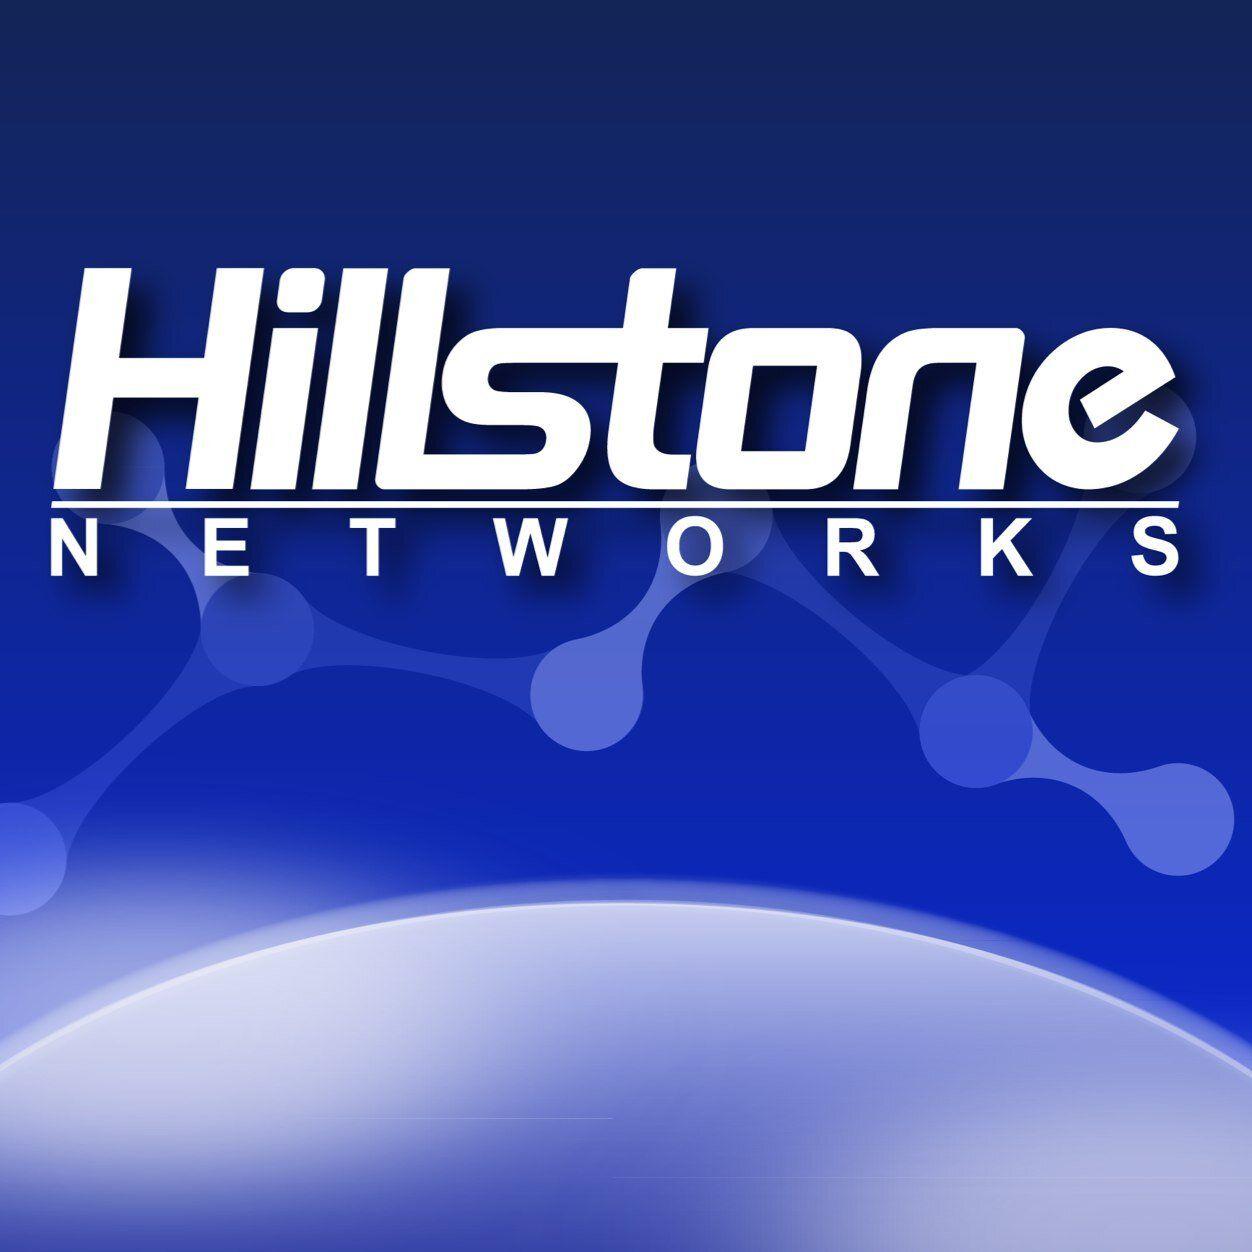 Hillstone Logo - Hillstone Networks